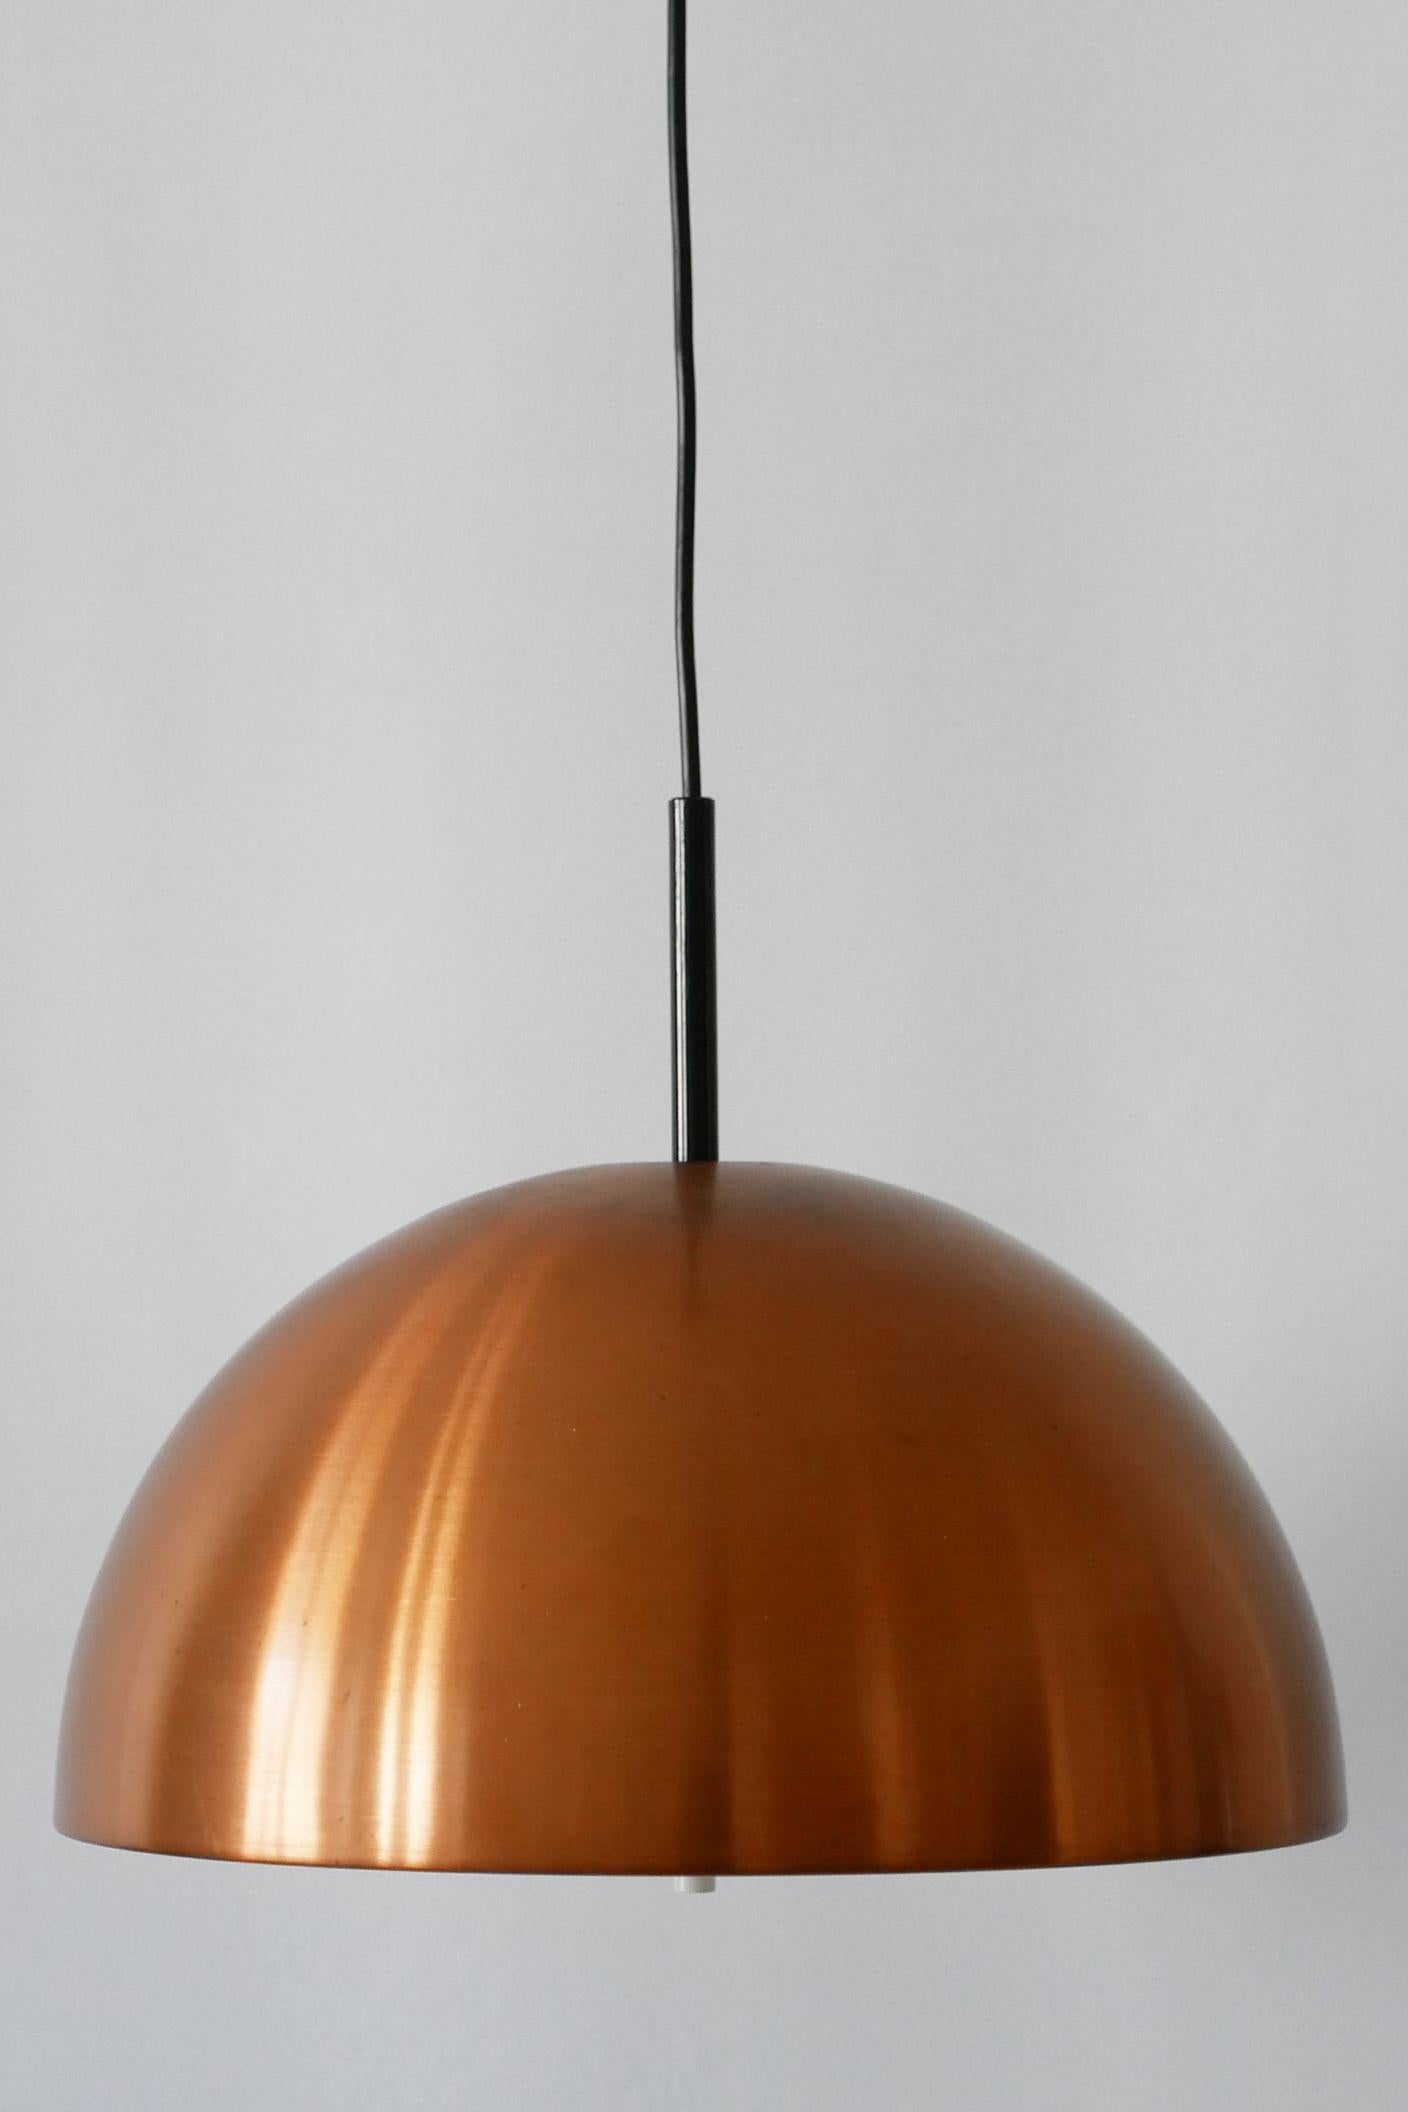 Elegant Mid-Century Modern Copper Pendant Lamp by Staff & Schwarz 1960s, Germany For Sale 3